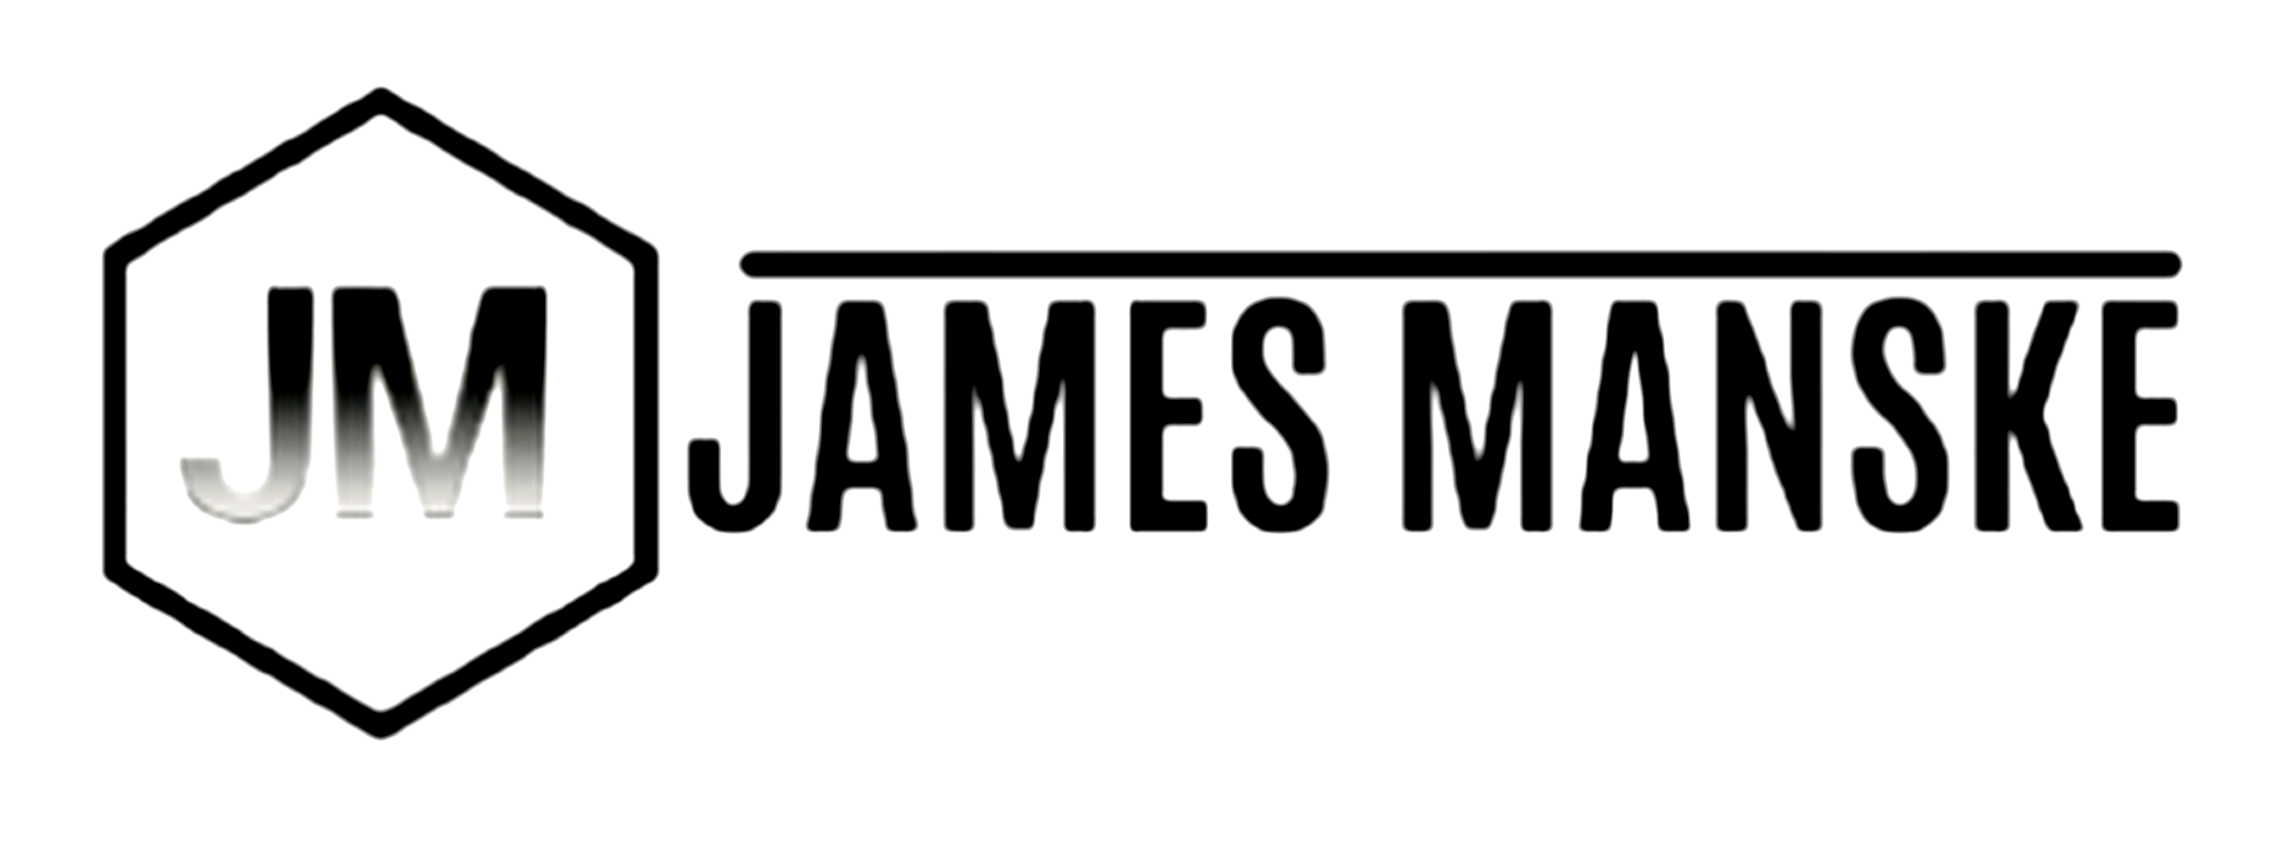 James Manske logo - The Courageous Mind